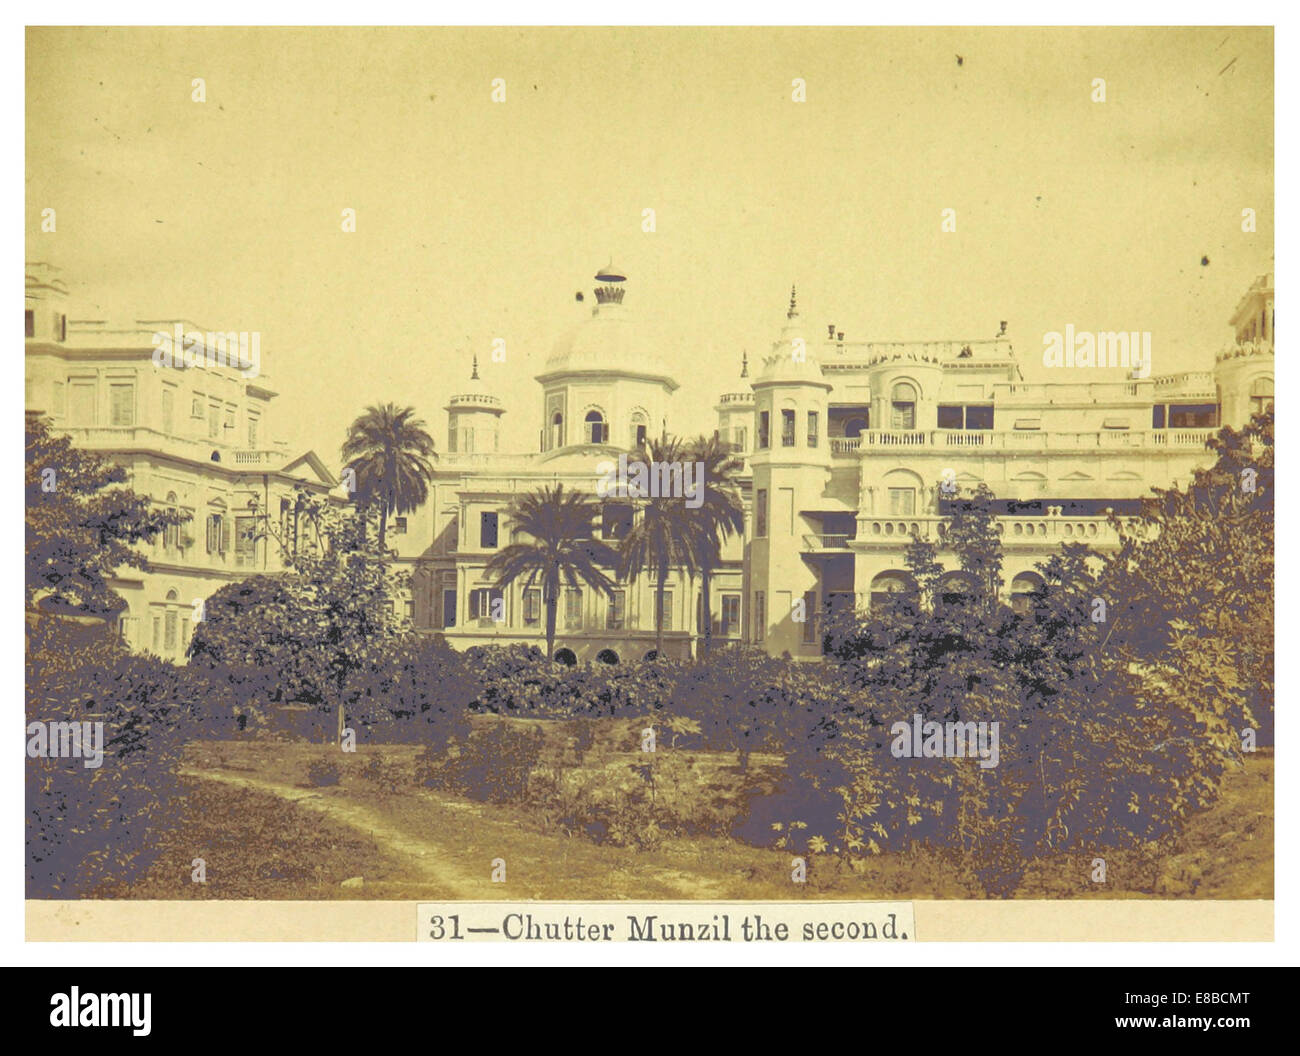 Lucknow Album (31) - Chutter Munzil the second Stock Photo